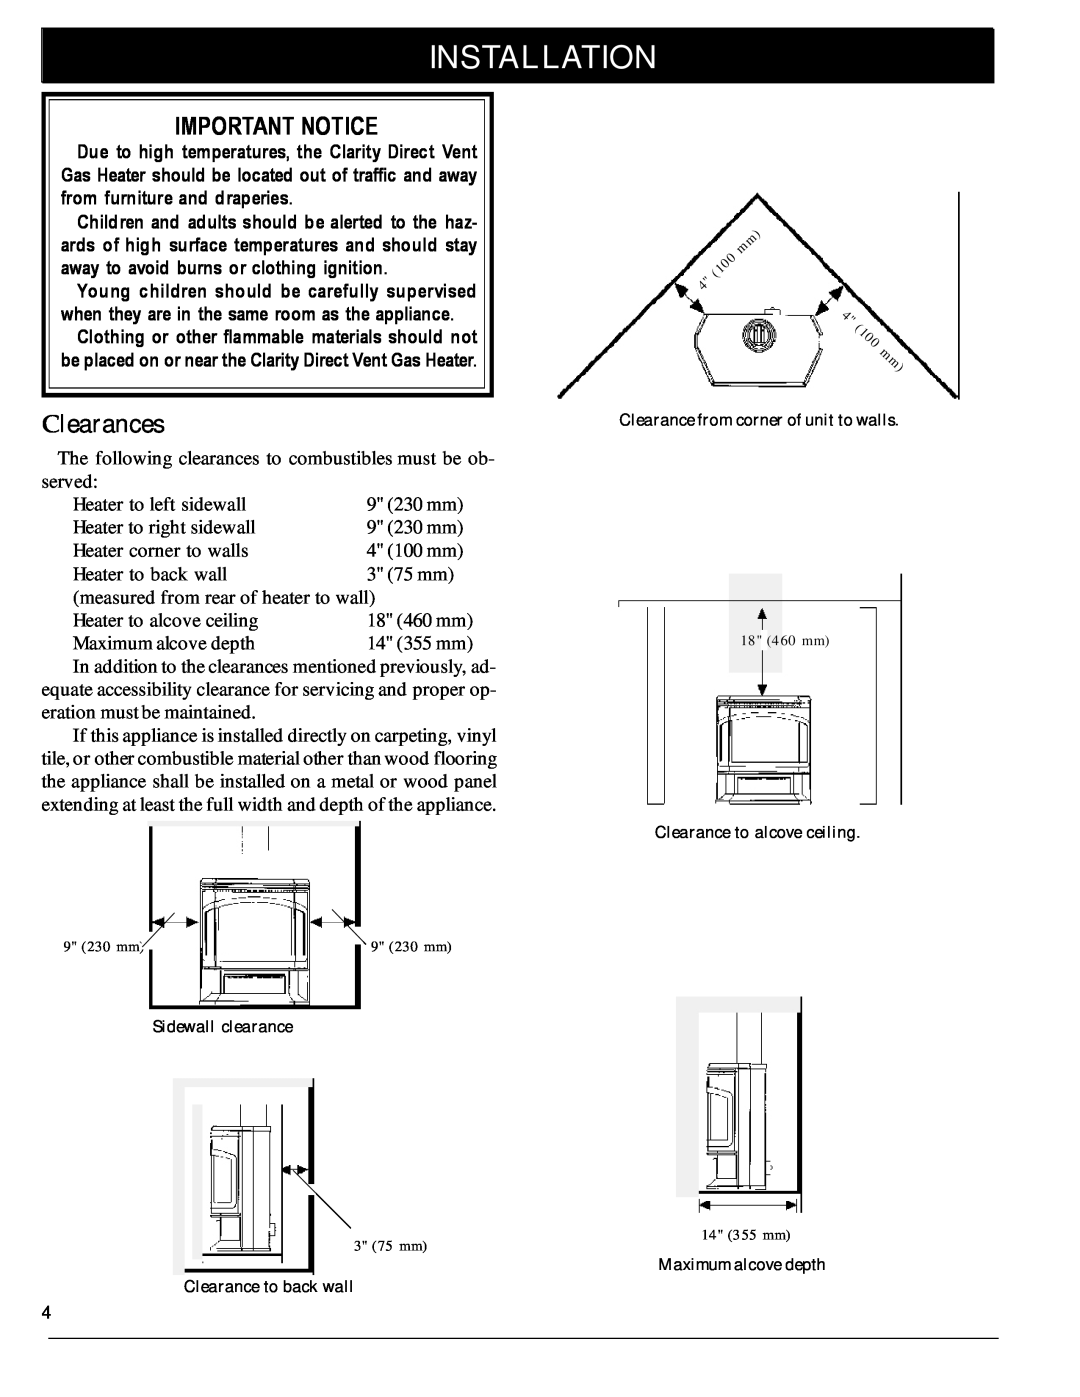 Harman Stove Company 929 DV manual Installation, Important Notice, Clearances 